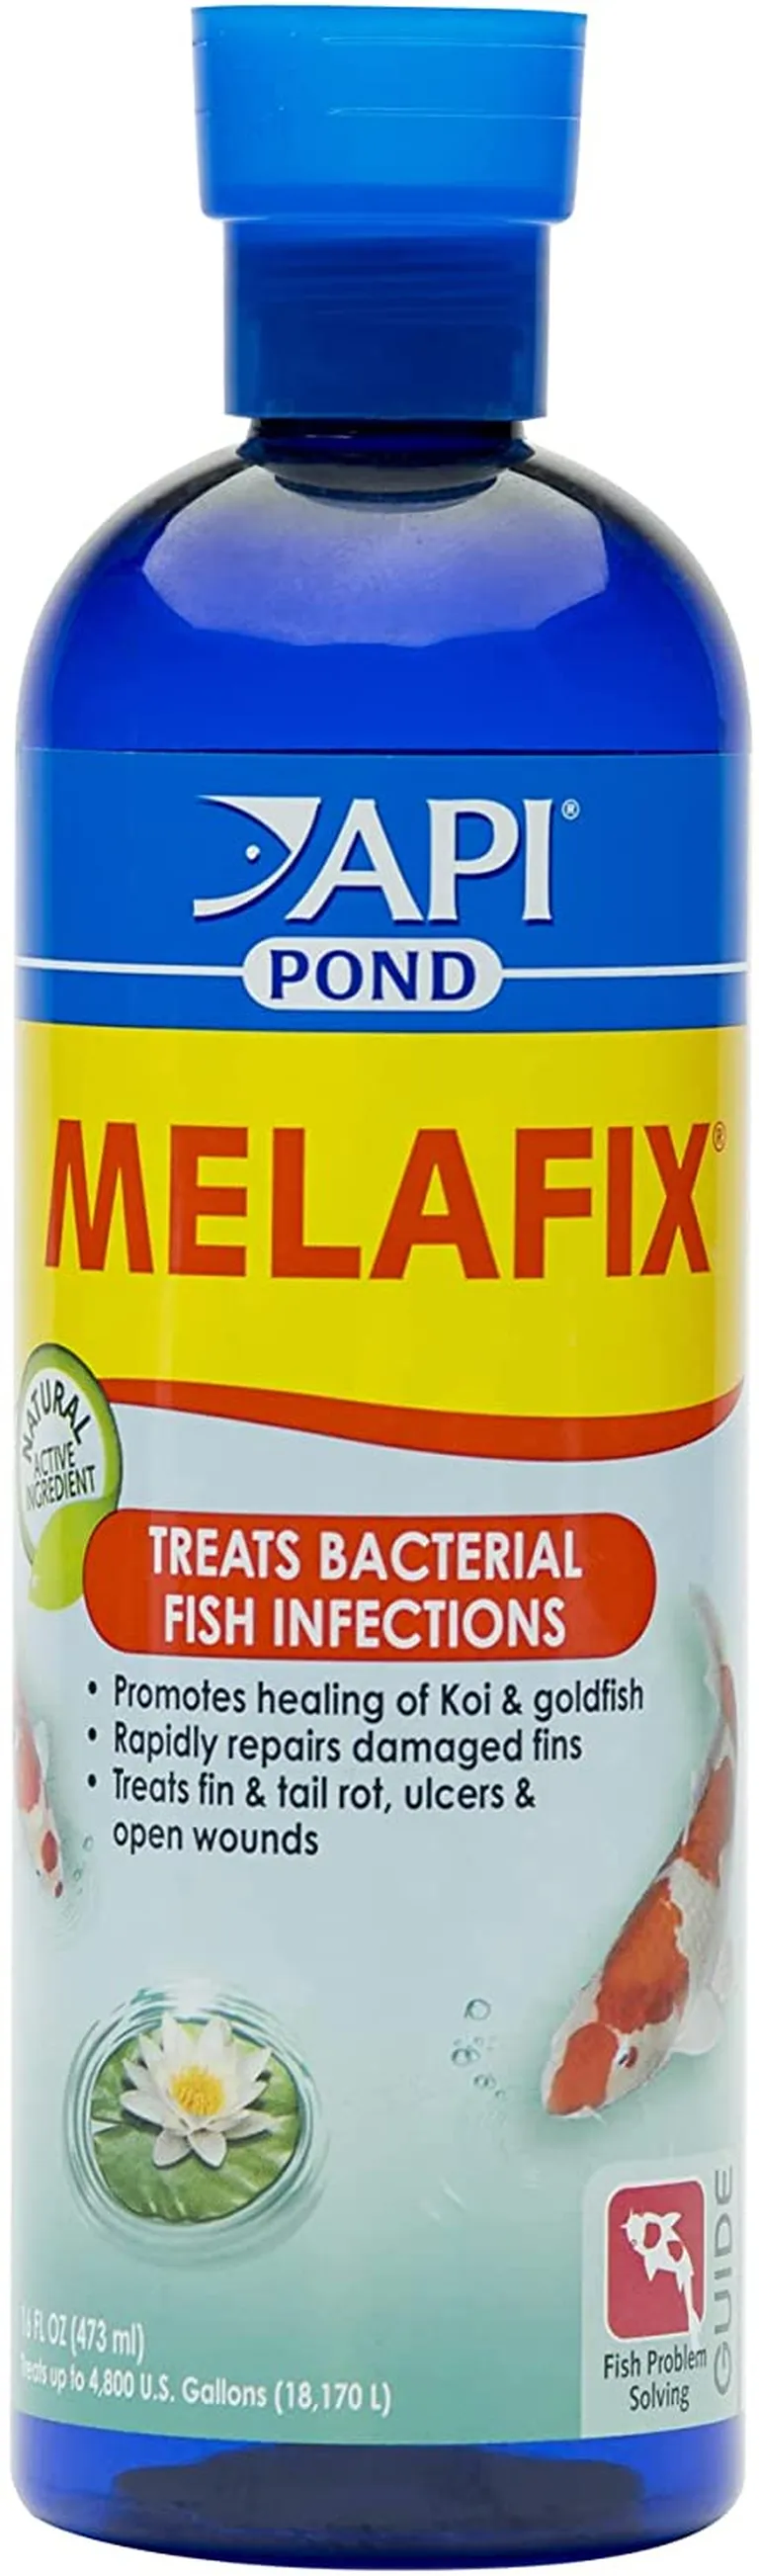 API Pond Melafix Treats Bacterial Infections for Koi and Goldfish Photo 1